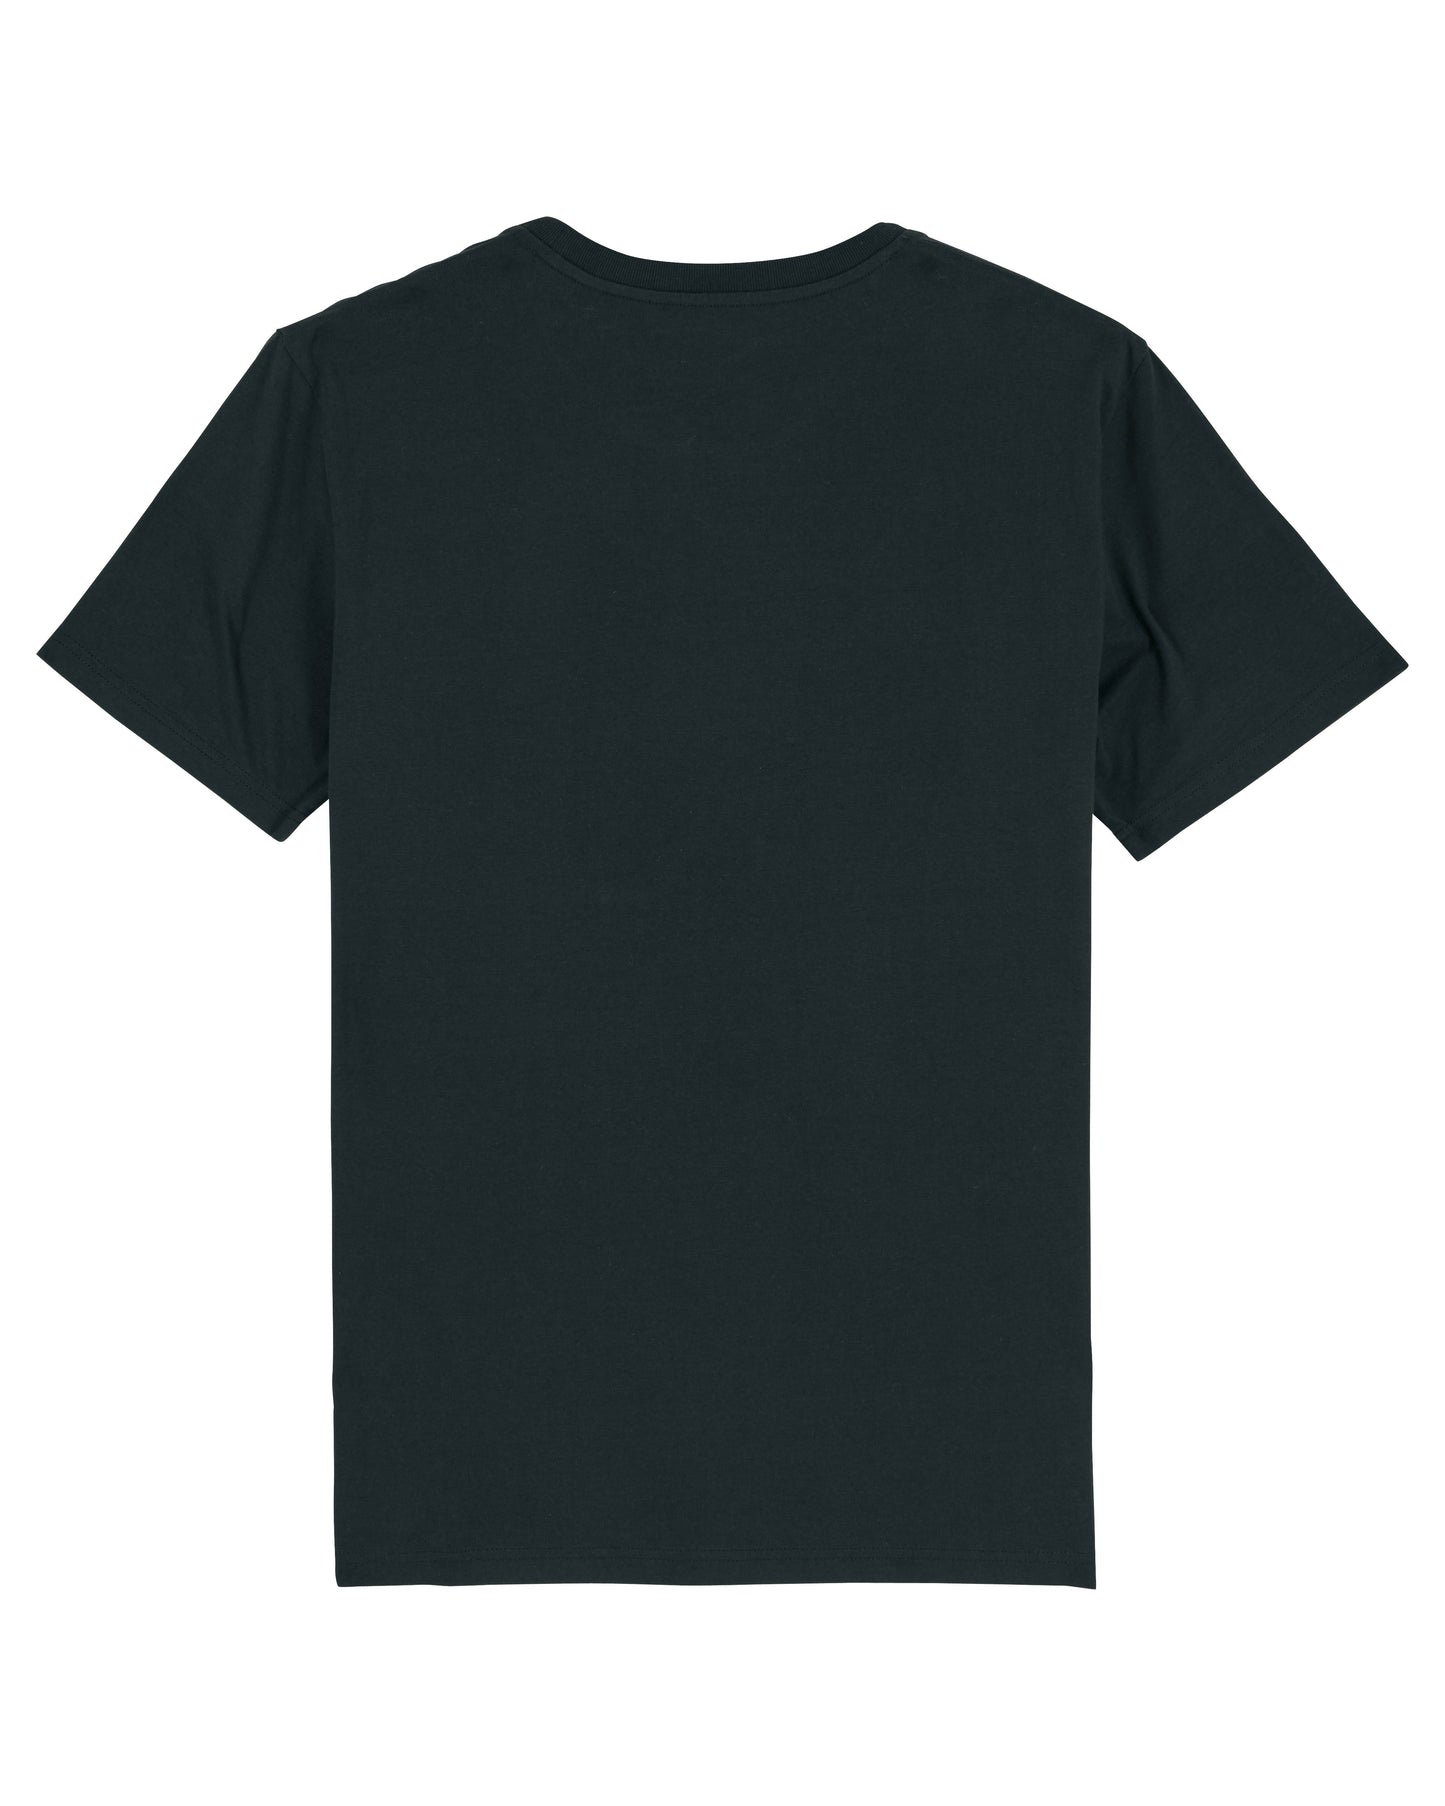 PIERRE BERGER- 100% Bio-Baumwolle Unisex T-Shirt Black White Simple Typhography